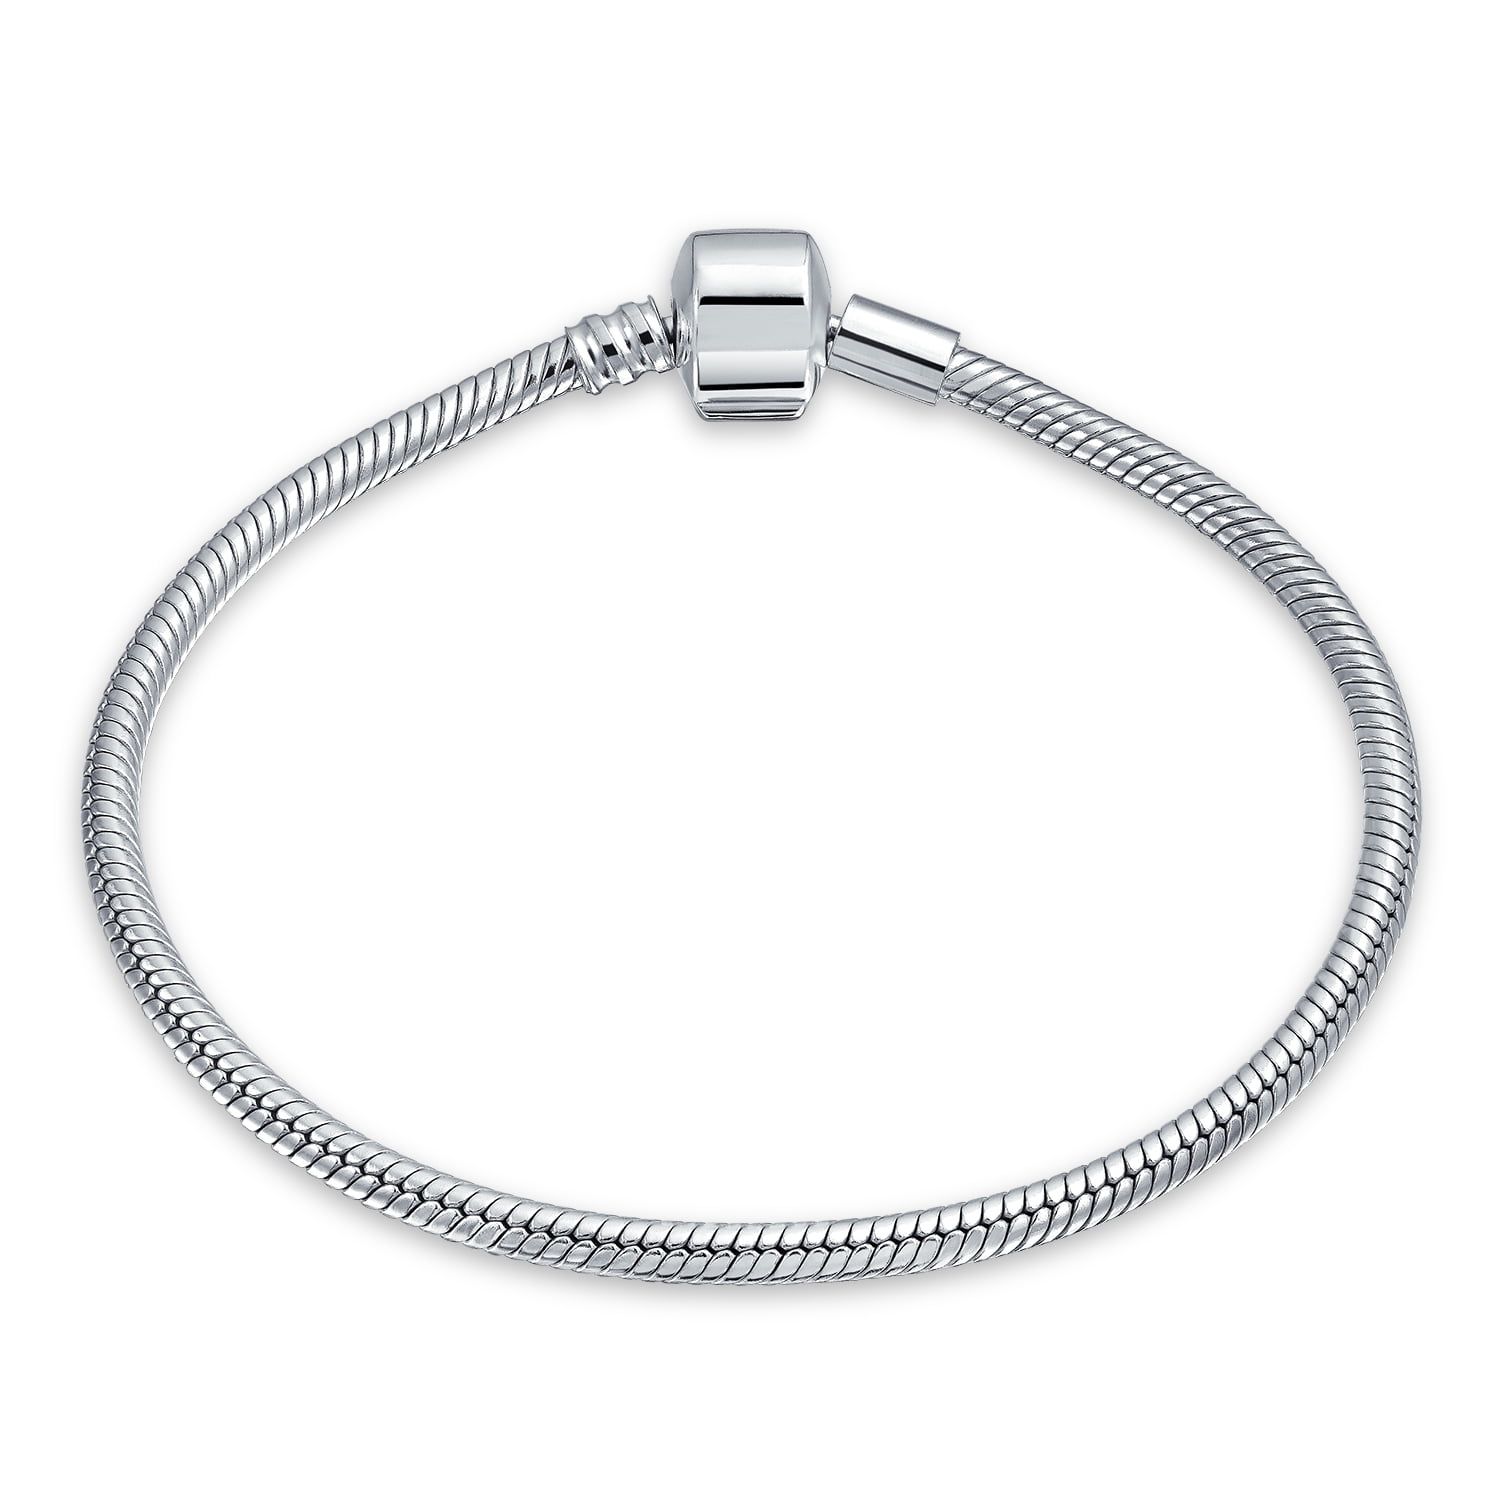 New 925 Silver Sterling Sparkling Shoe pendant Charm Fit European Brand bracelet